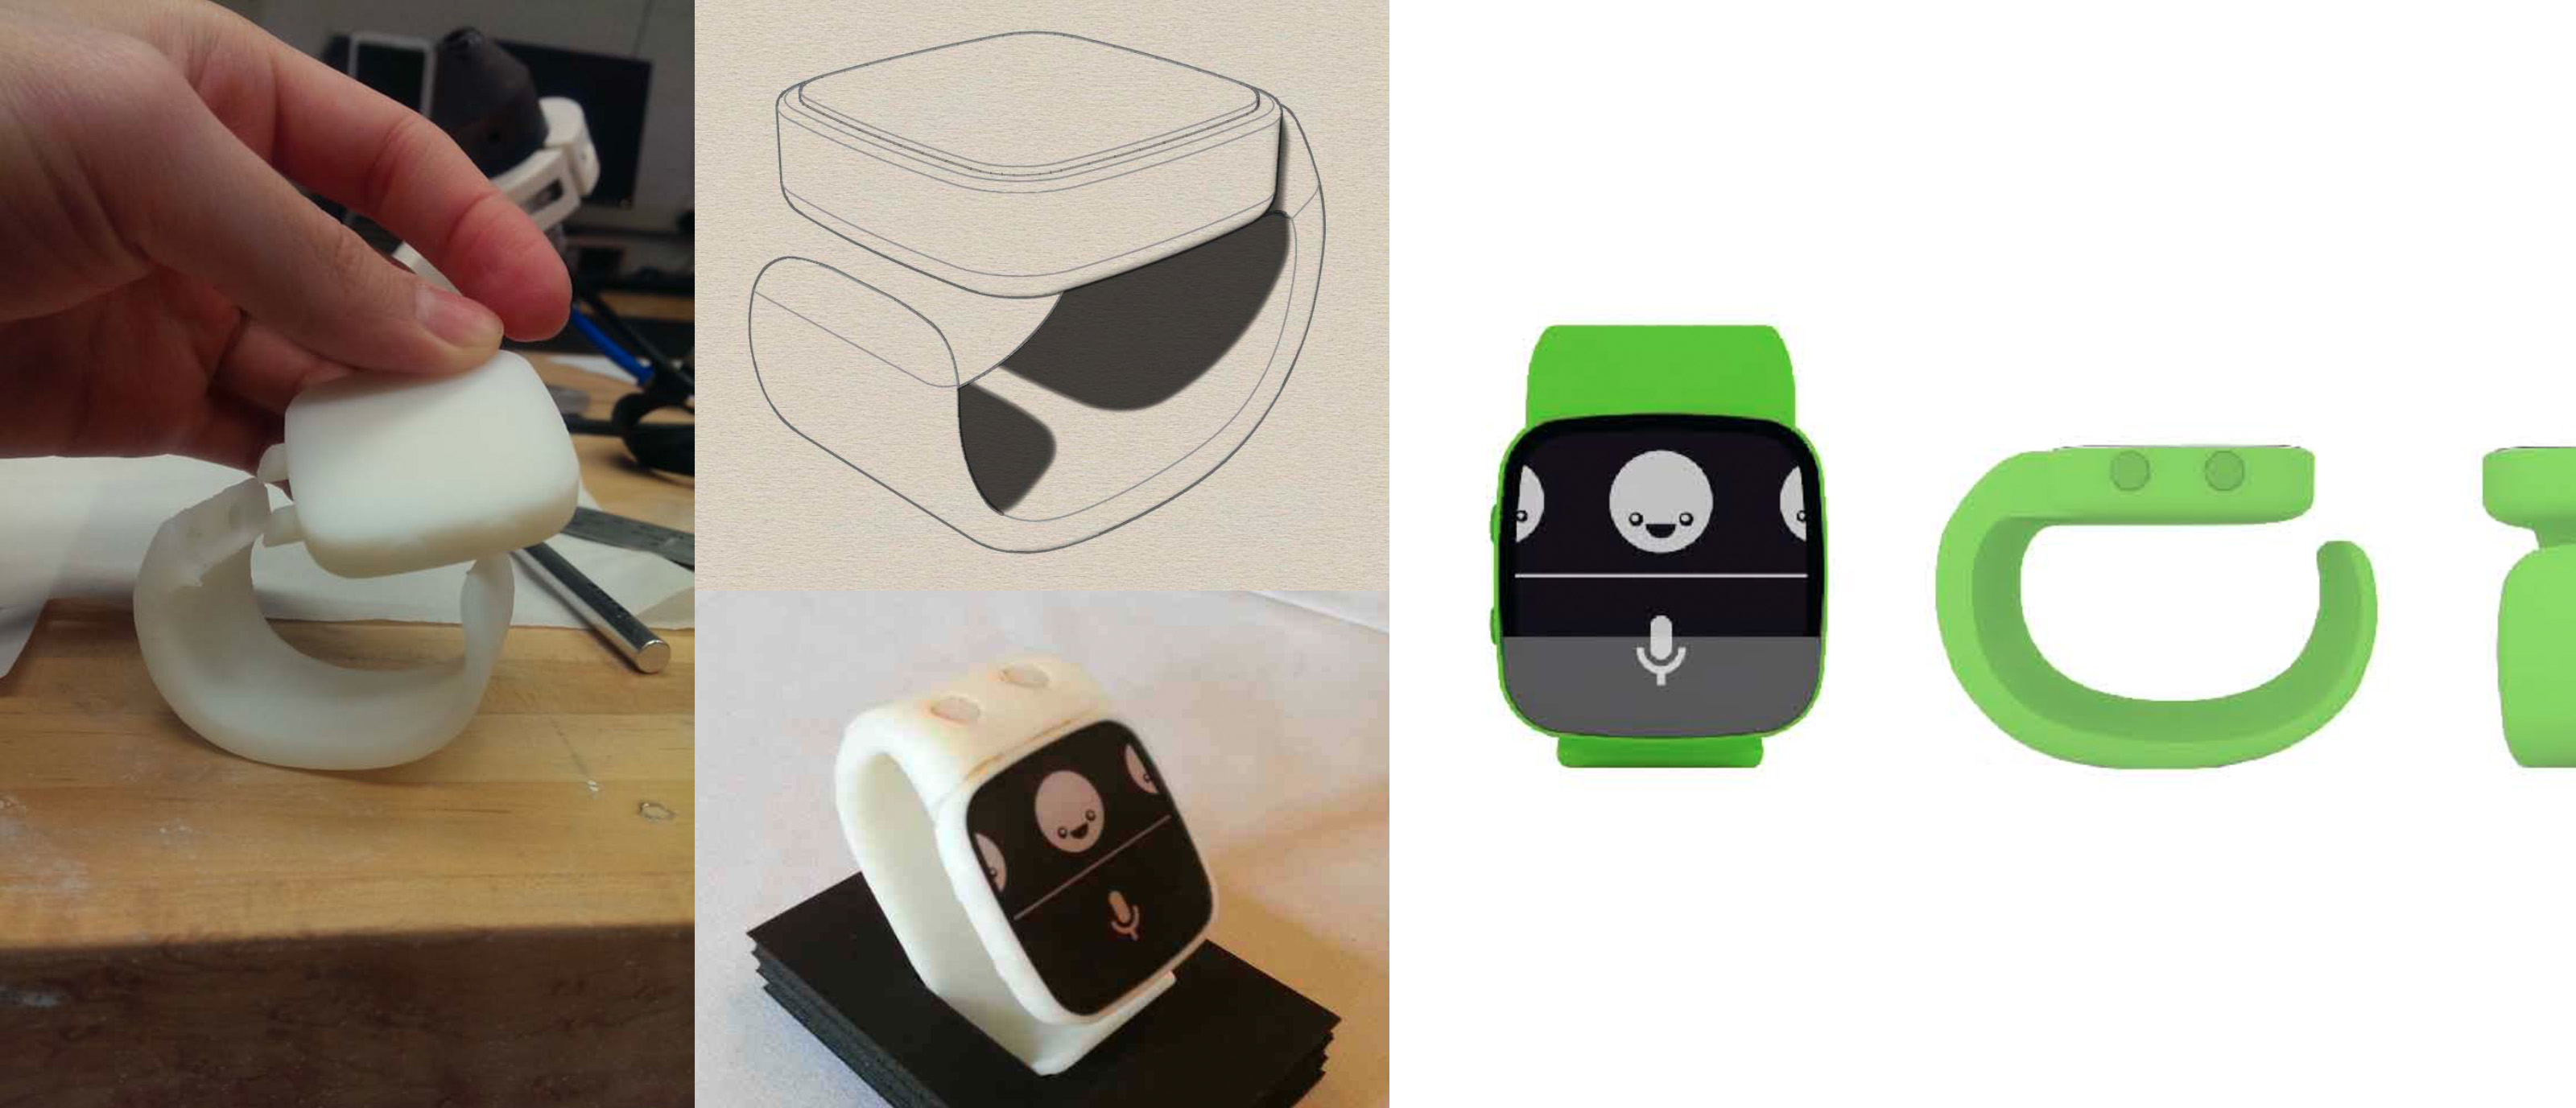 3D printed wrist watch. 3D model of wrist watch before printing.